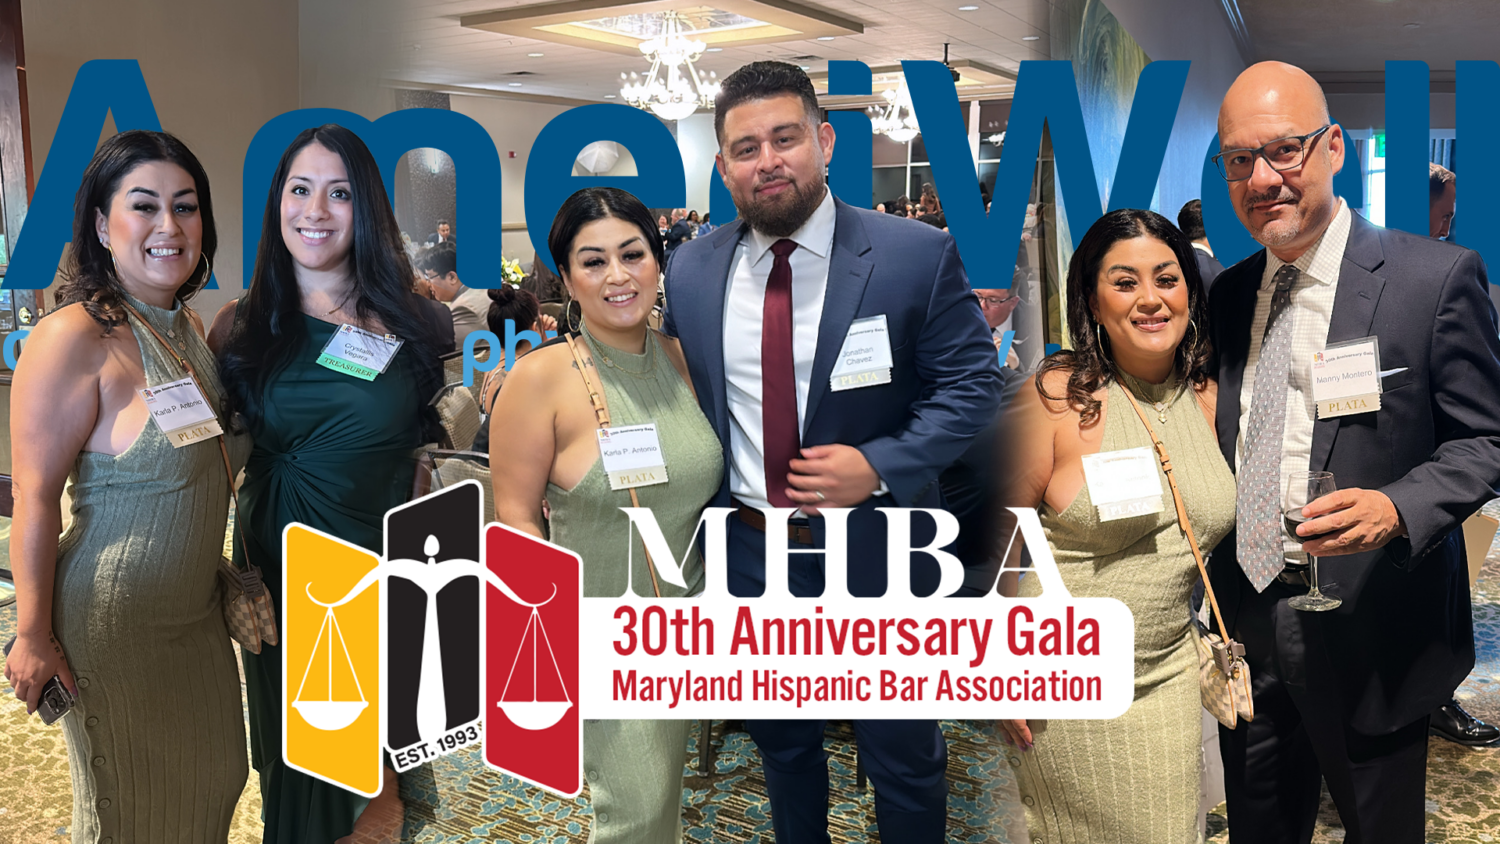 AmeriWell Shines at MHBA's 30th Anniversary Gala during Hispanic Heritage Month